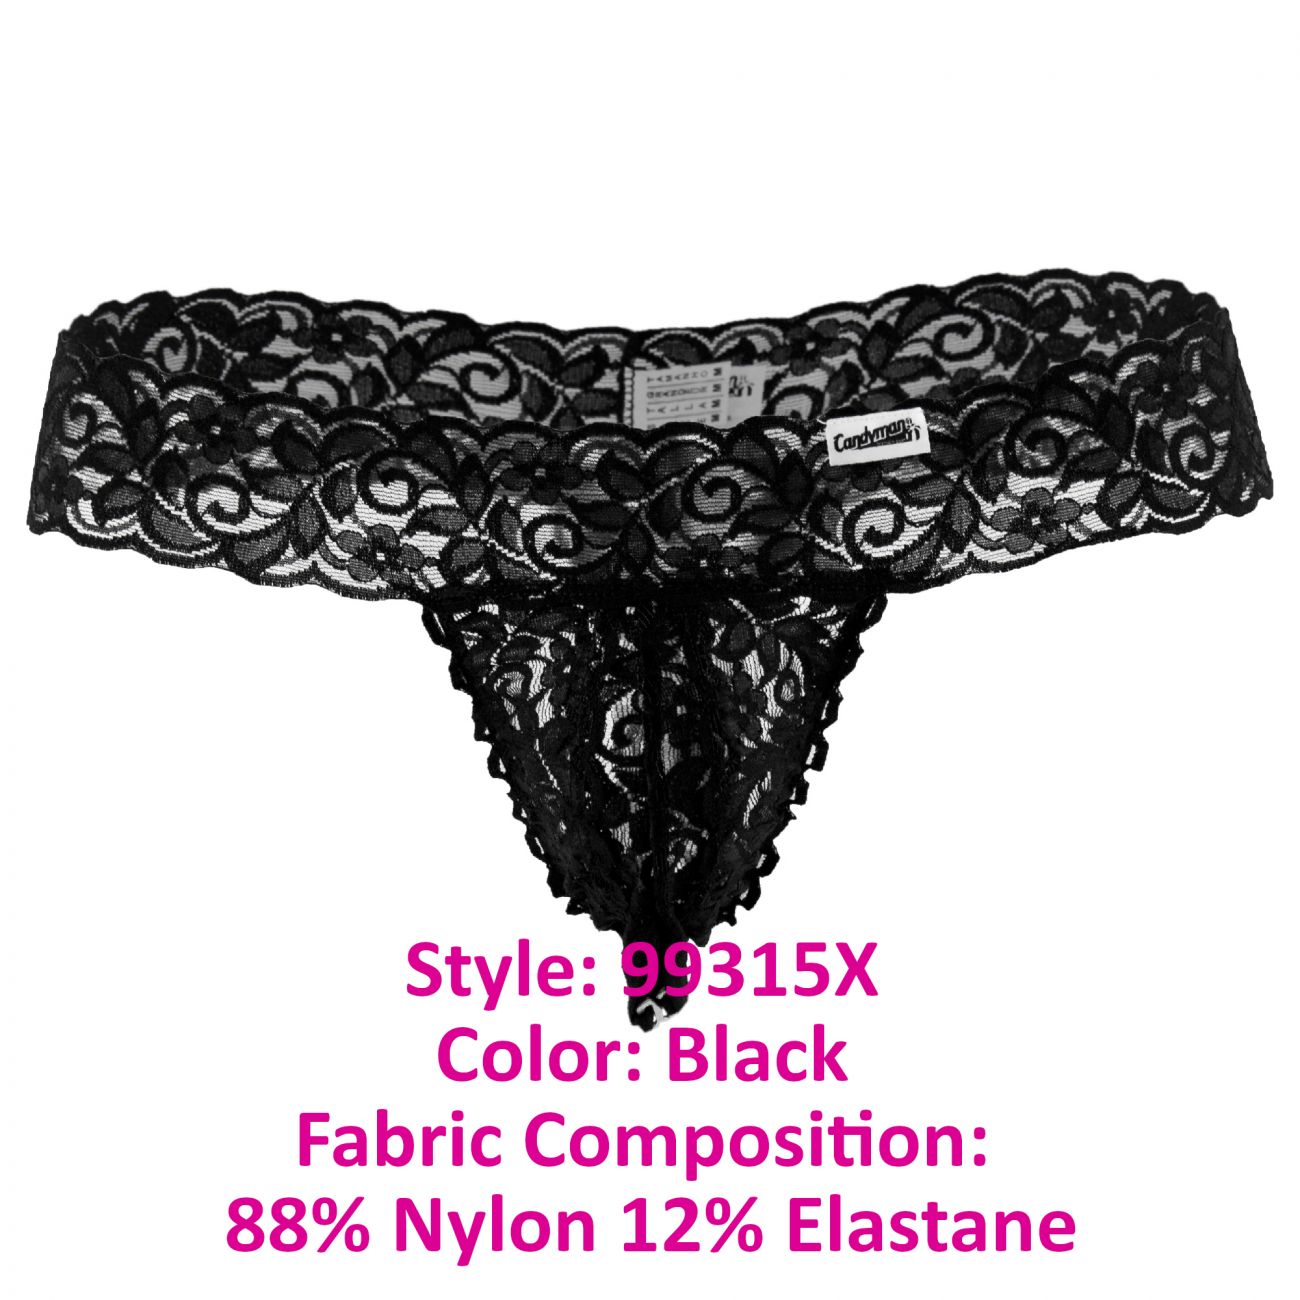 CandyMan 99315X Peek a Boo Lace Thongs Color Black